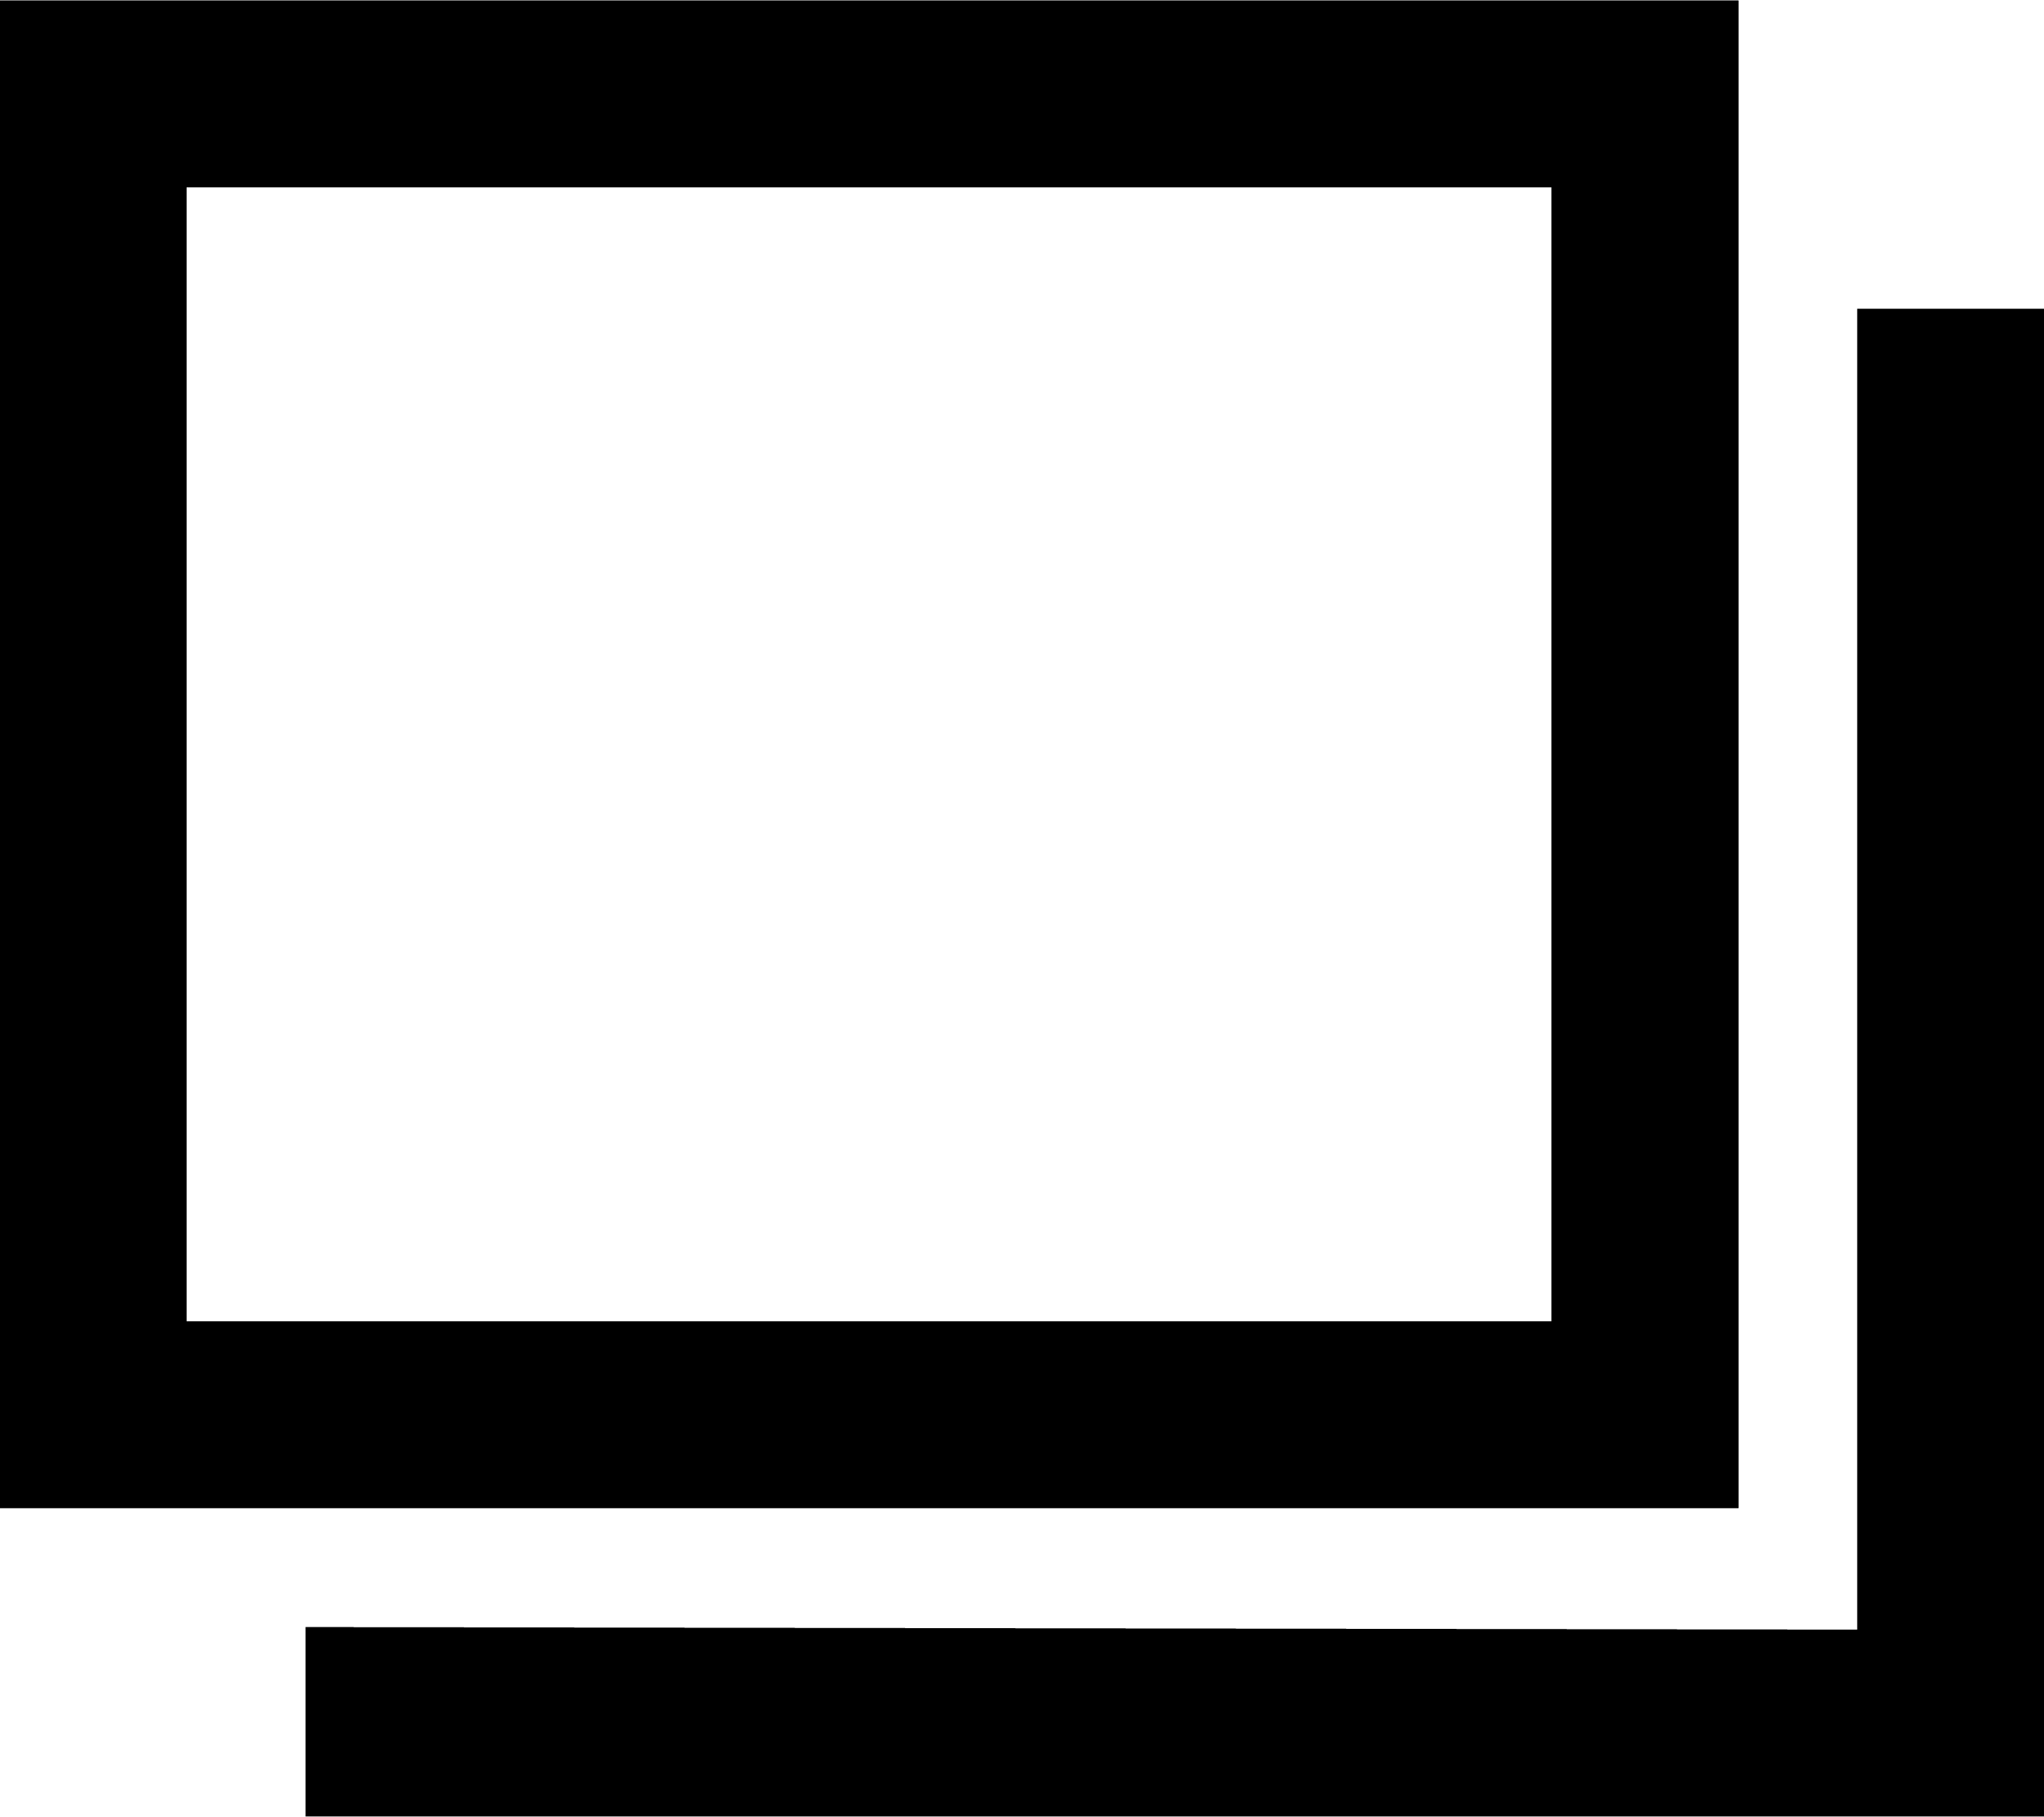 etherscan-logo